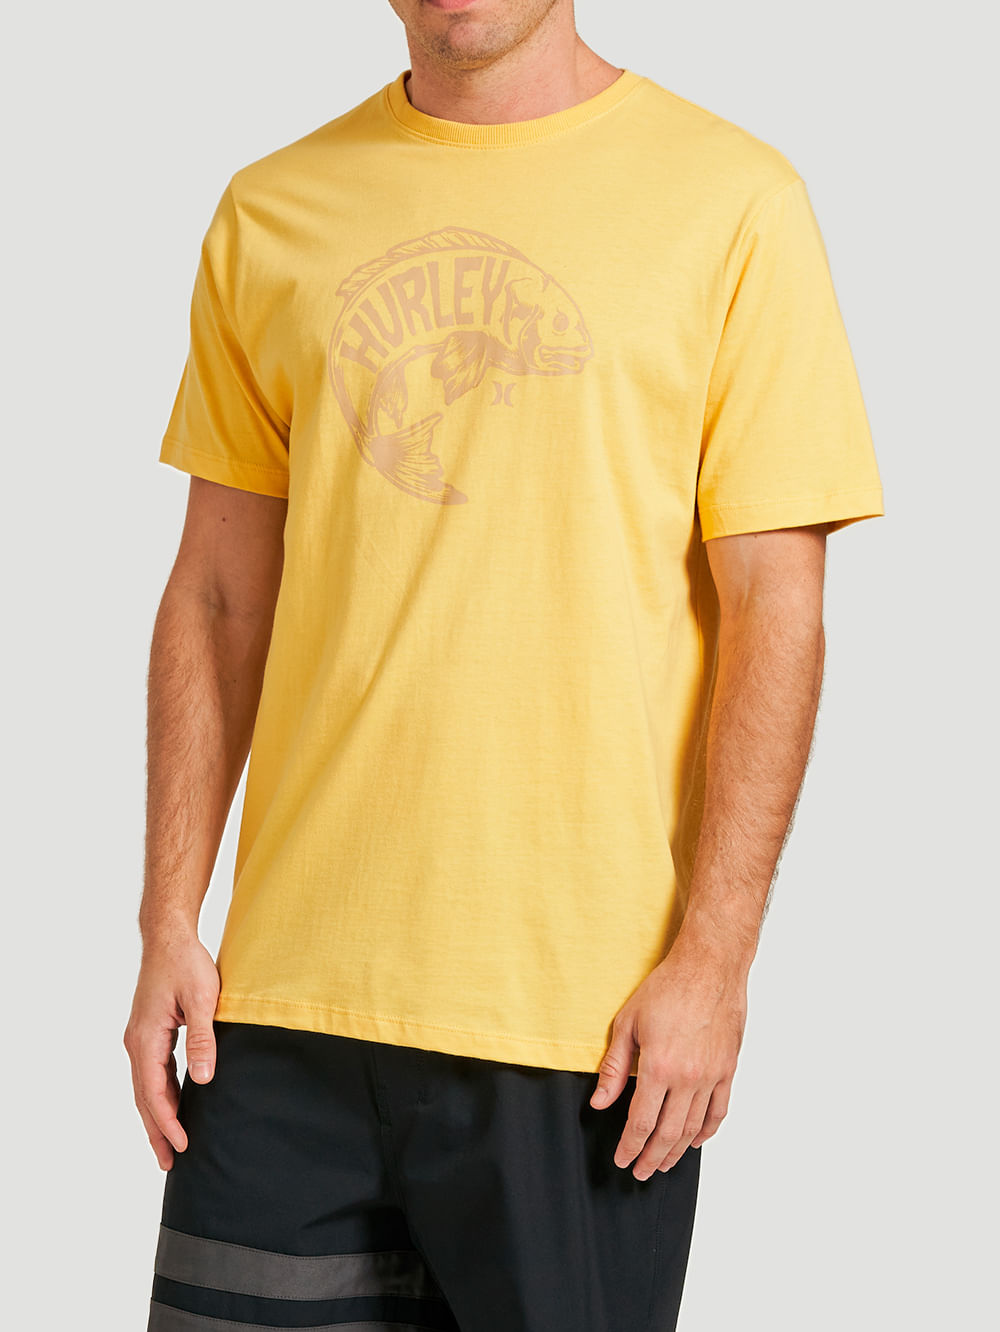 Camiseta Hurley Big Fish Amarelo